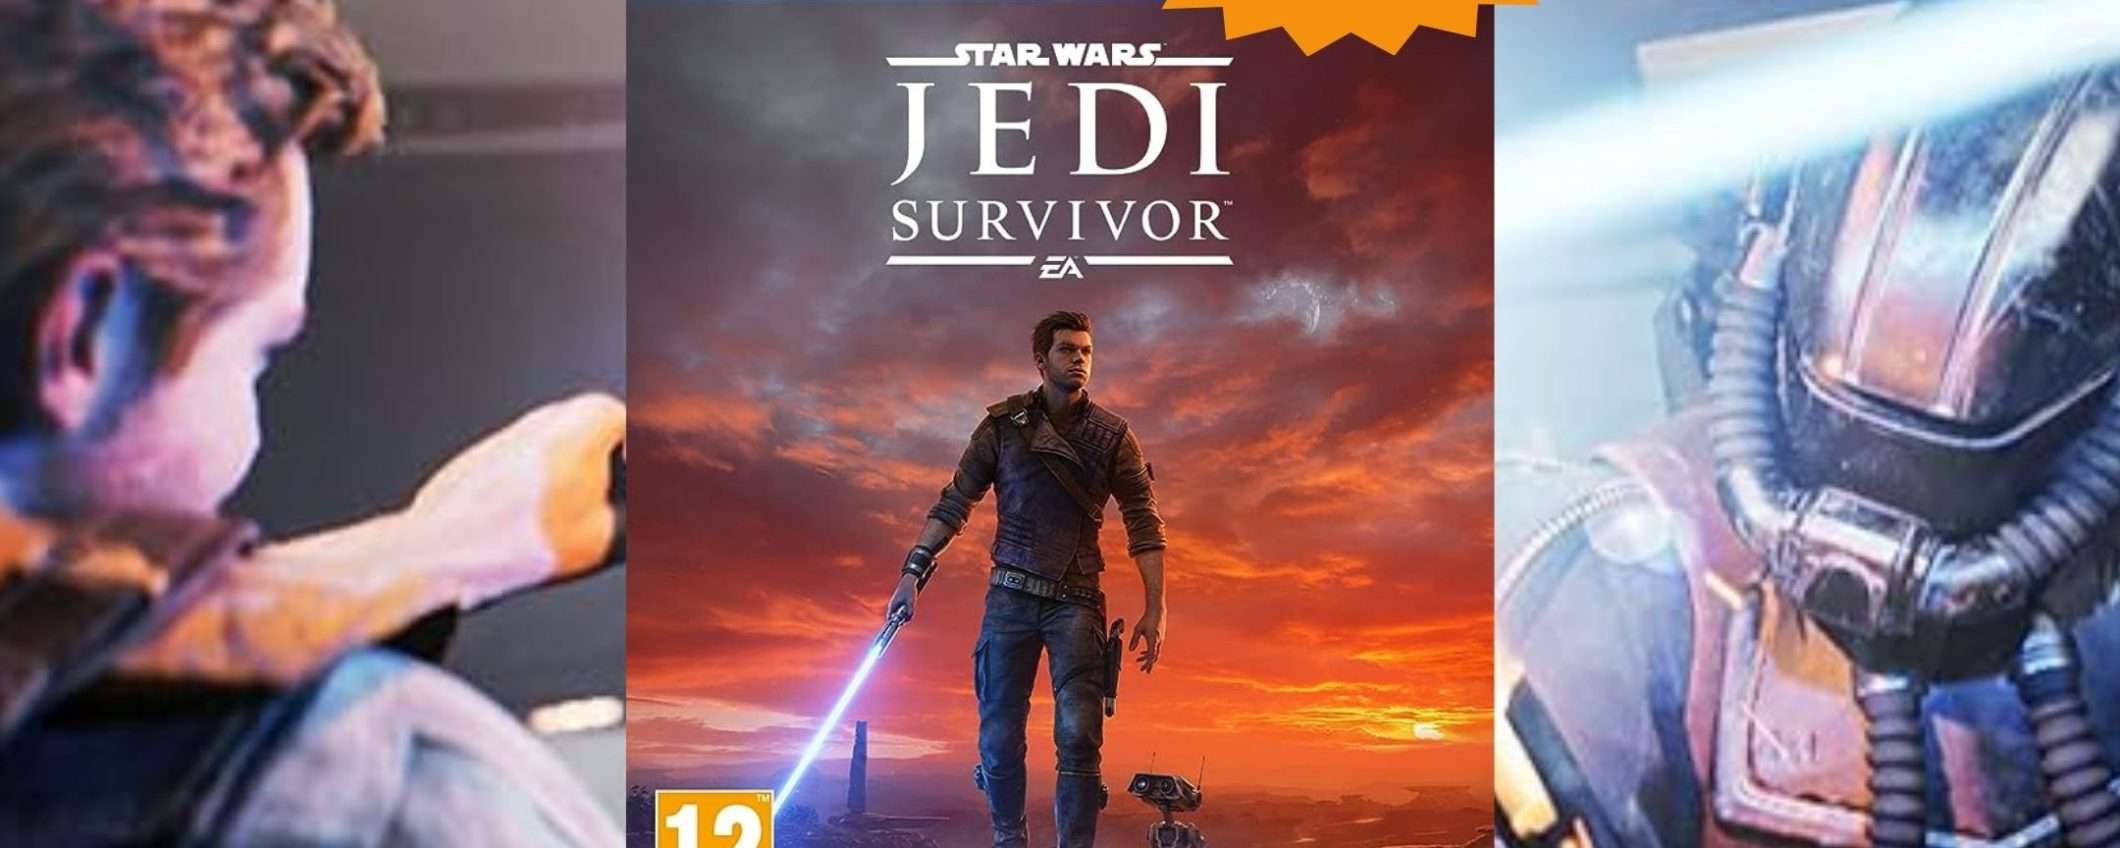 Star Wars Jedi Survivor PS5: sconto FOLLE del 50% su Amazon